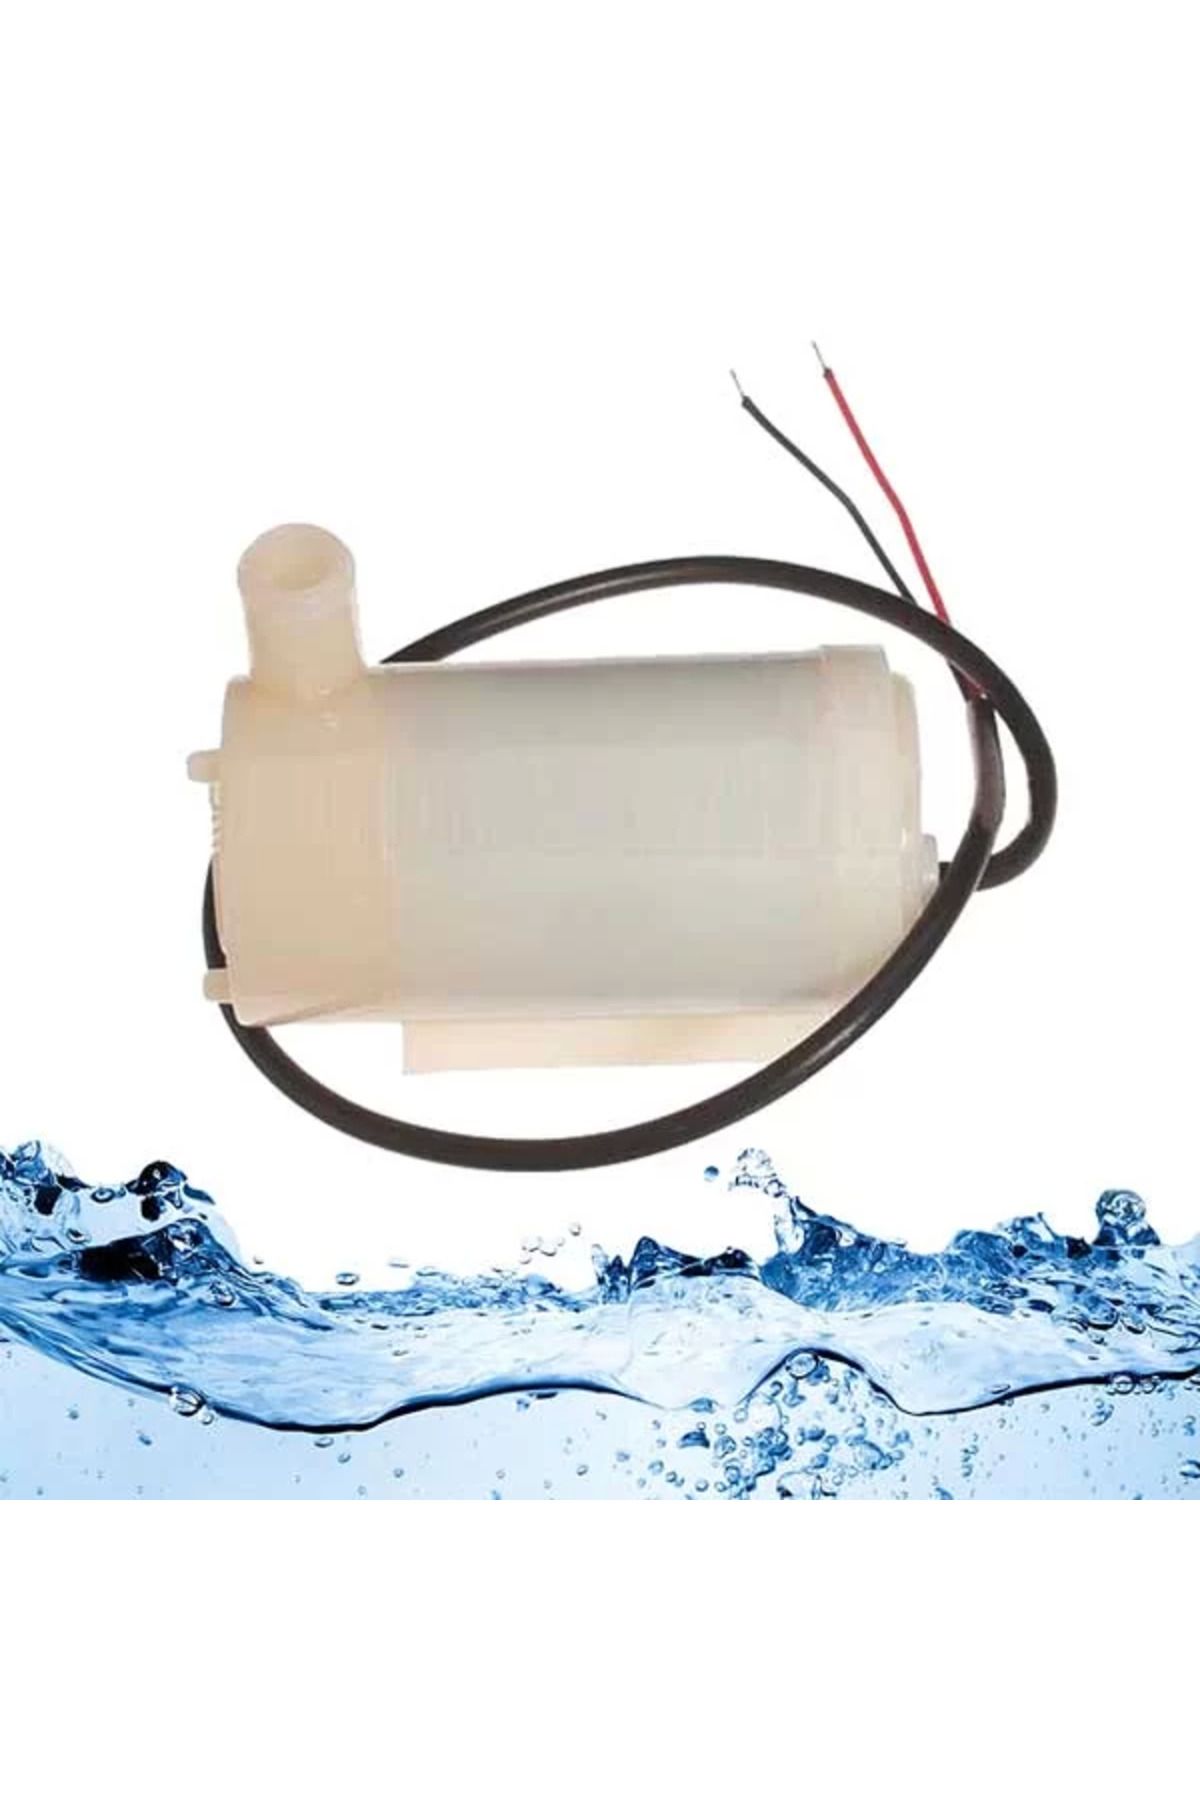 Genel Markalar Mini Dalgıç Pompa - Solenoid Su Pompası 120l-h